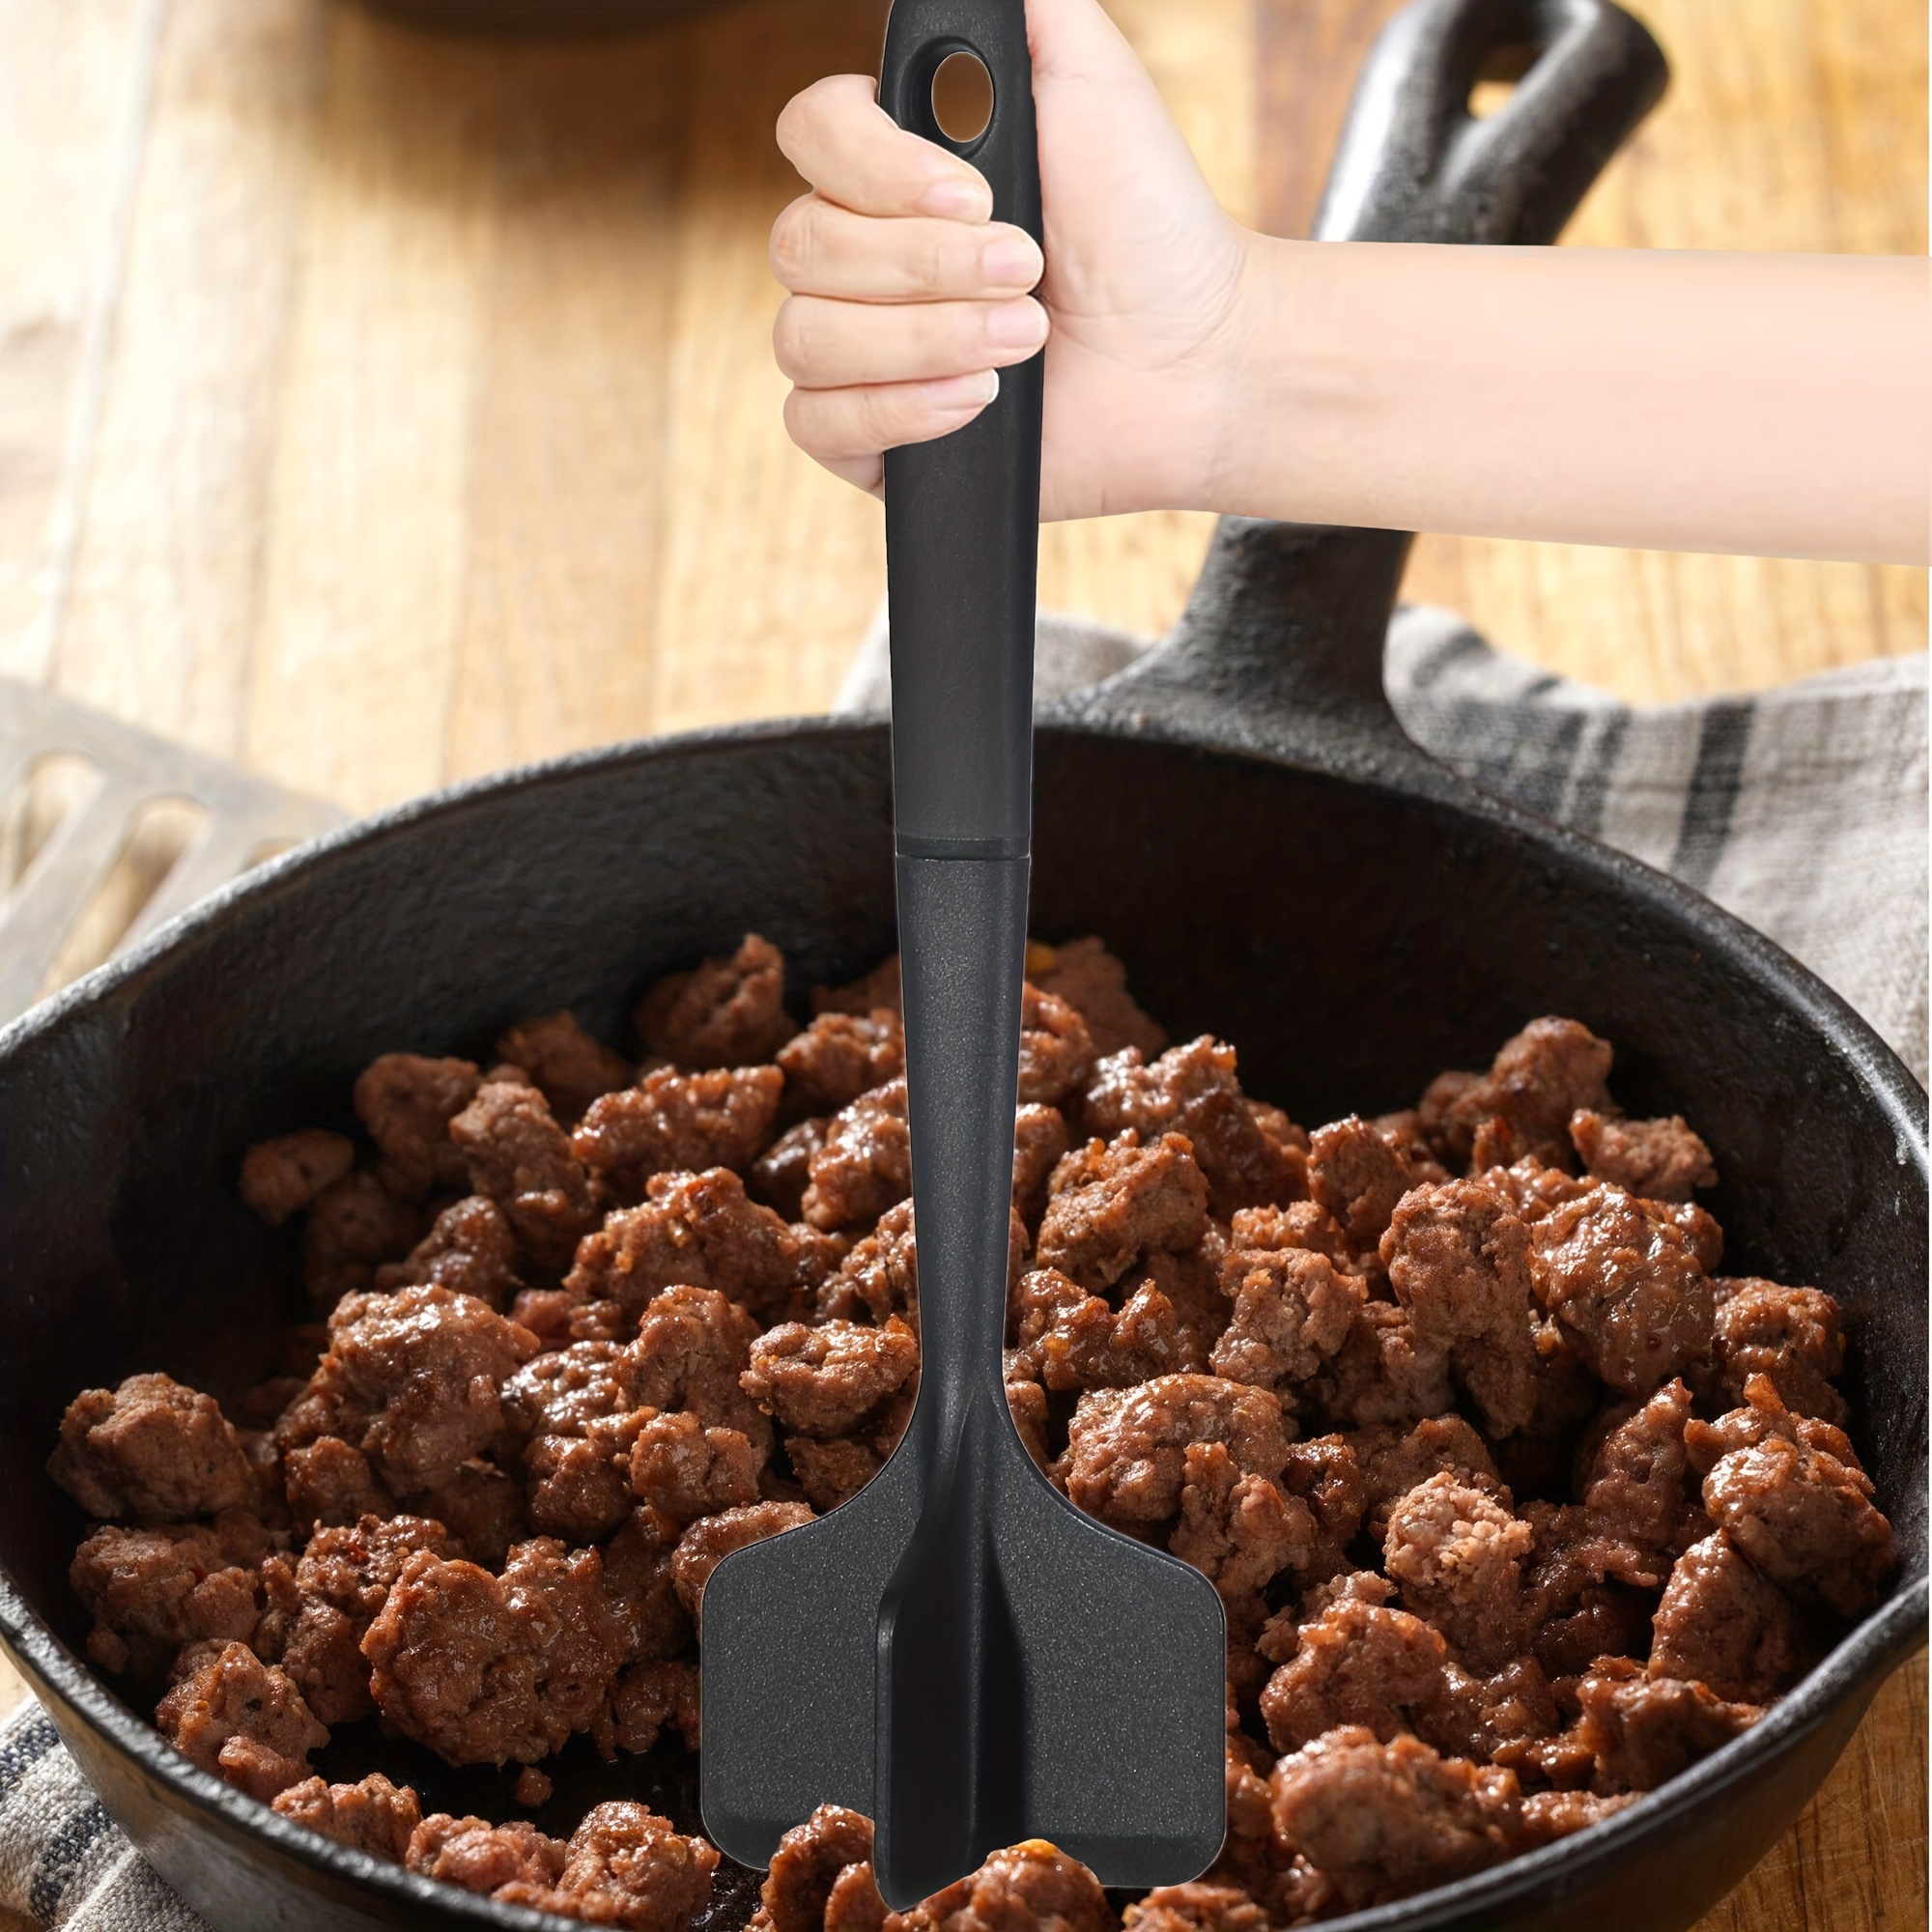 5 Blades Kitchen Ground Meat Chopper Spatula | Hamburger Ground Beef Mix N Chop Tools | for Non-Stick Cookware (Black)